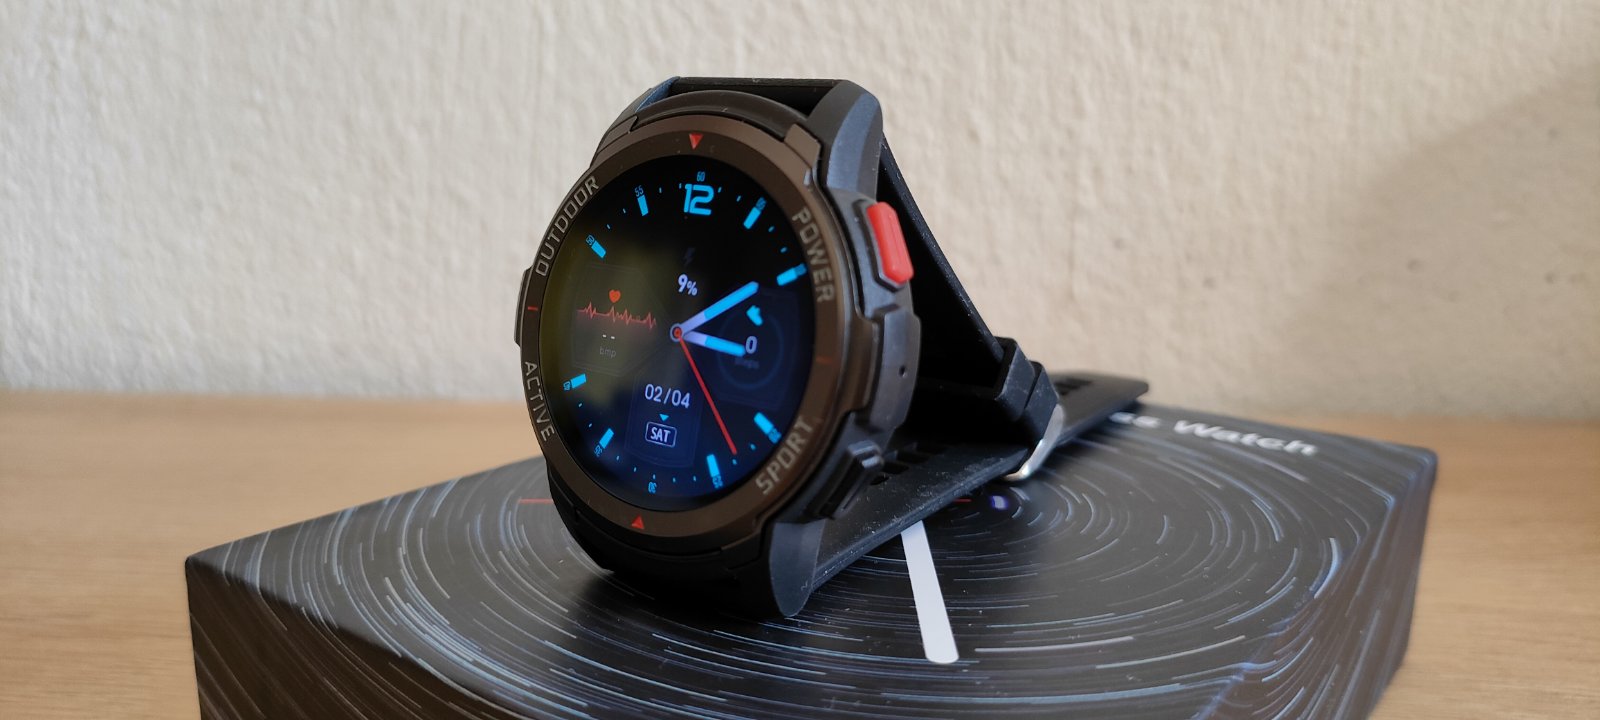 Smartwatch καινούργιo με δυνατότητα συνομιλίας, 100+custom watcfaces, μετρήσεις οξυγόνου, πίεσης